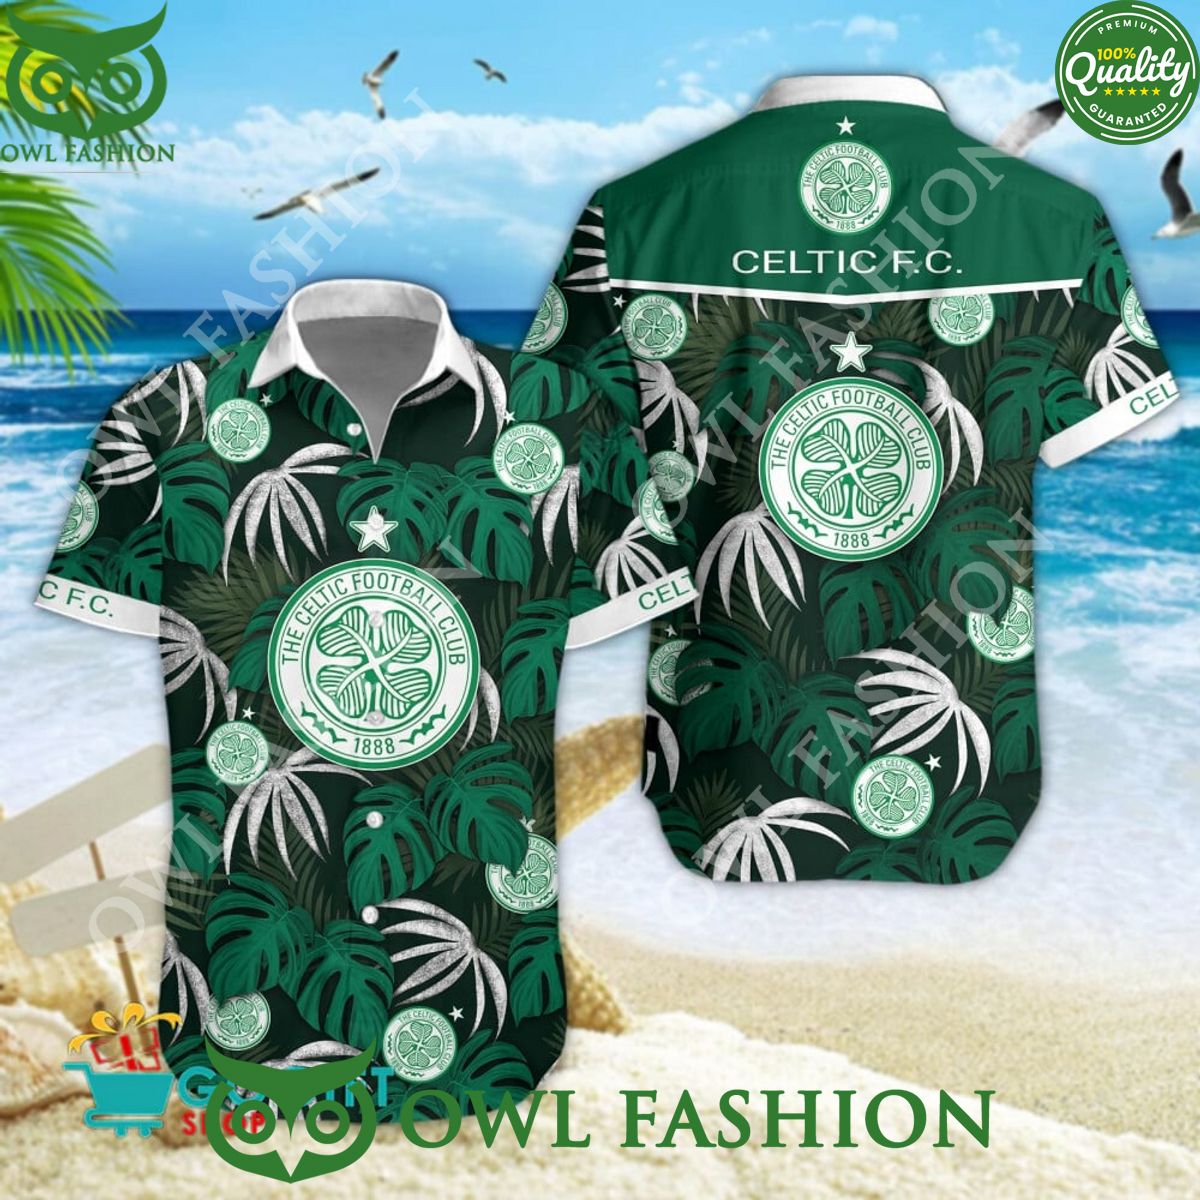 Celtic F.C. Scottish Football Champion Limited Hawaiian Shirt Coolosm